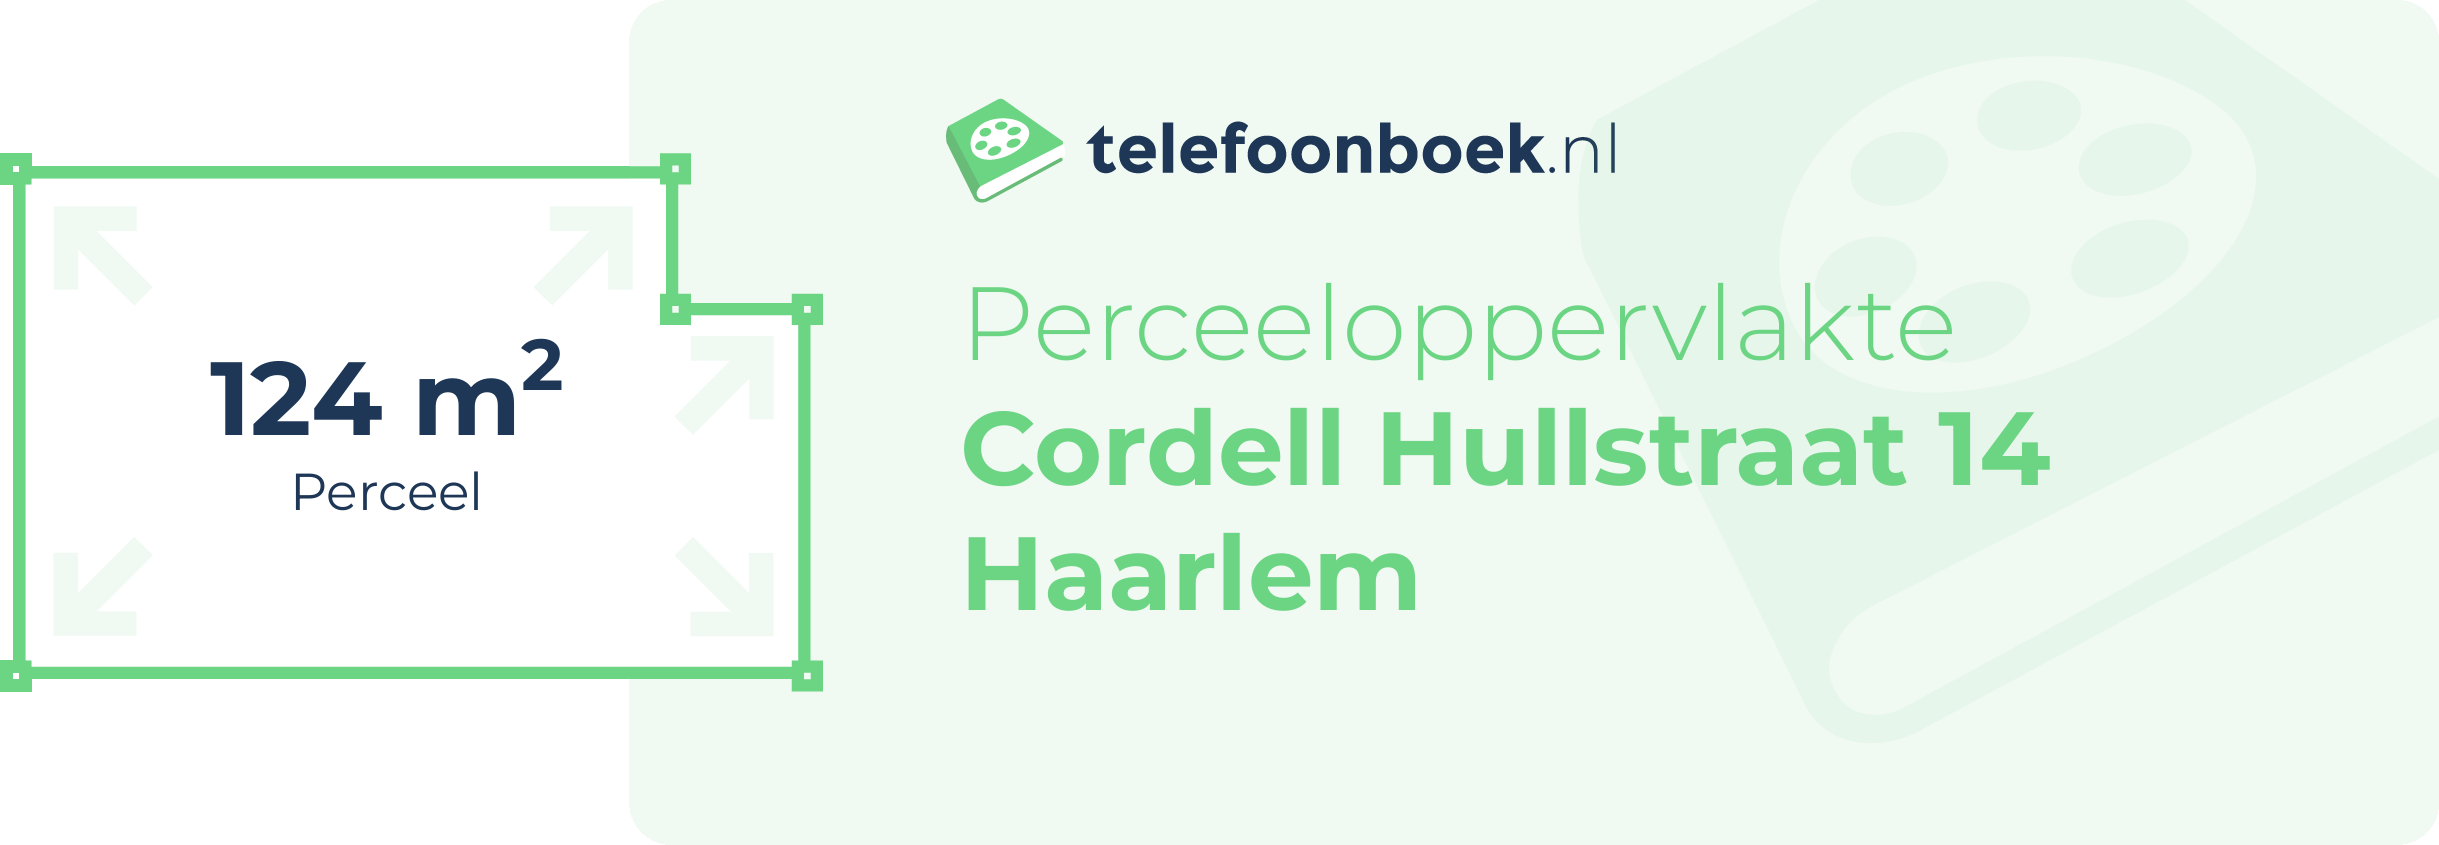 Perceeloppervlakte Cordell Hullstraat 14 Haarlem